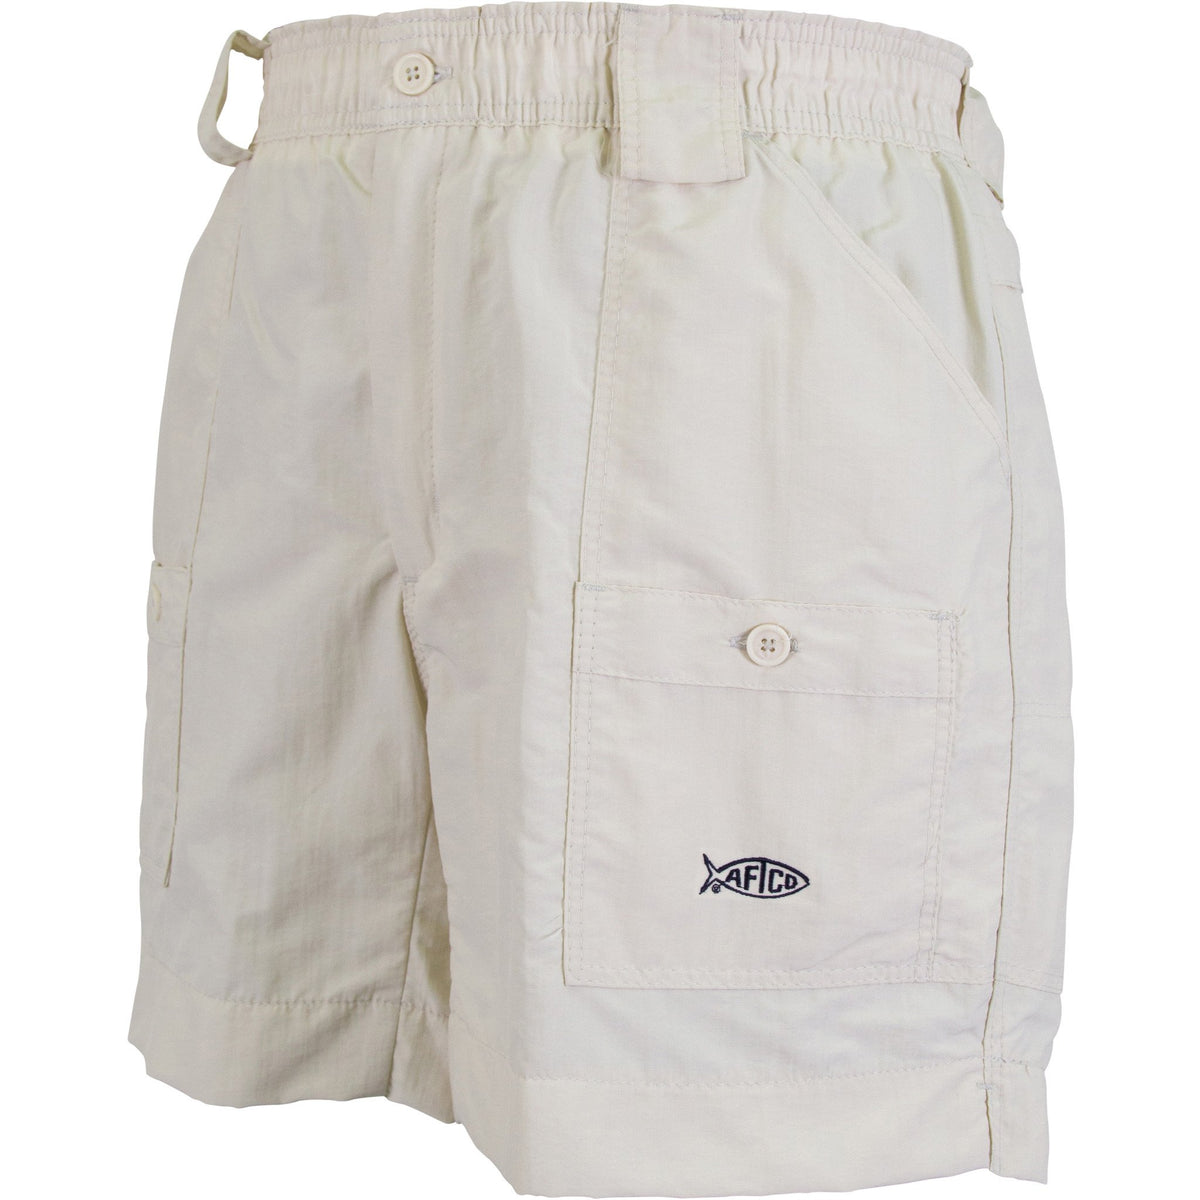 AFTCO Original Fishing Shorts - Oak - 36 at  Men's Clothing store